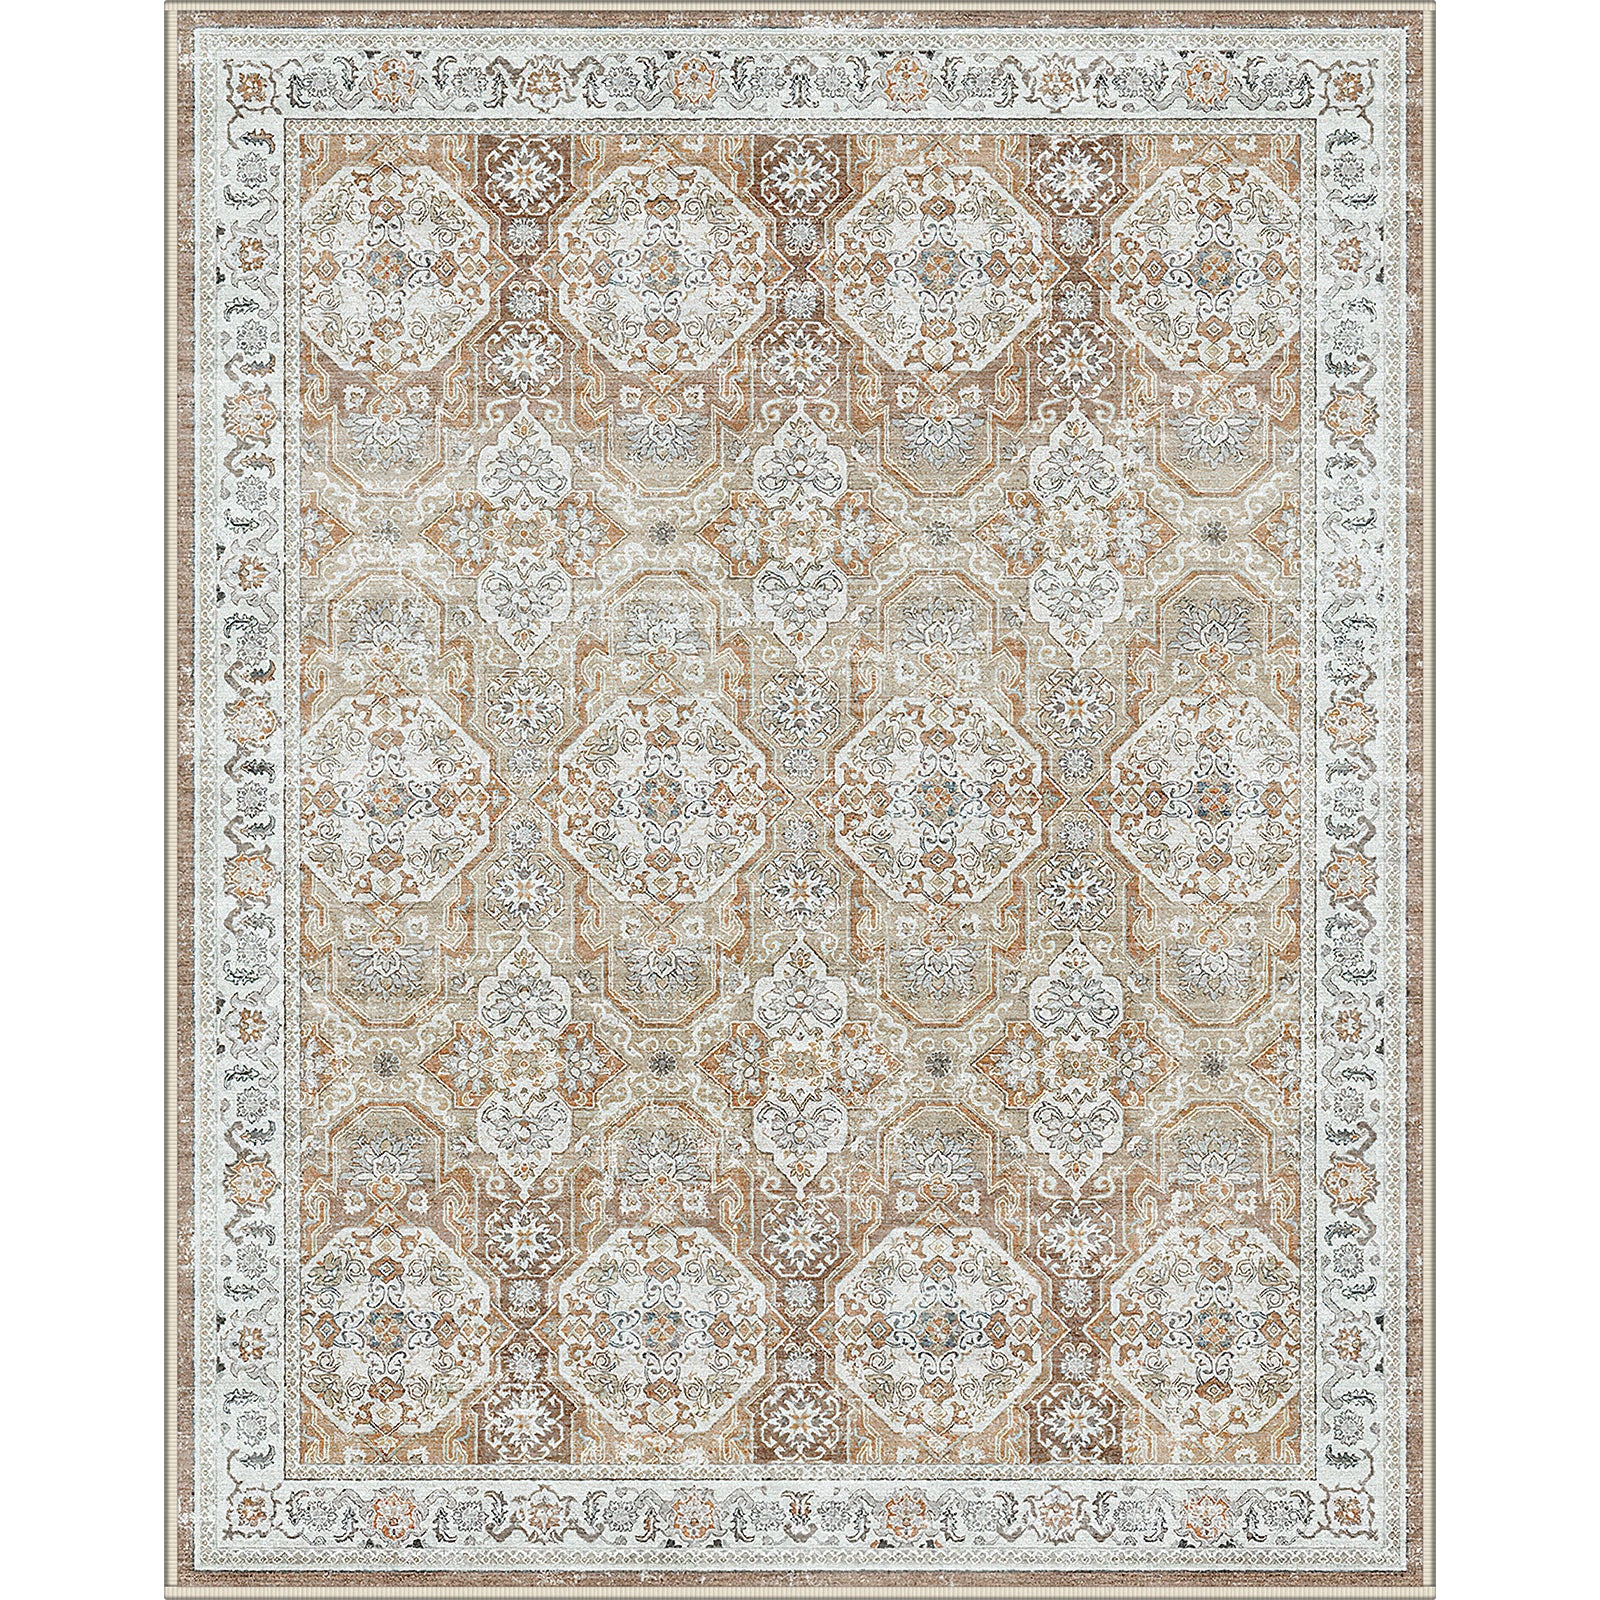 Traditional rug design